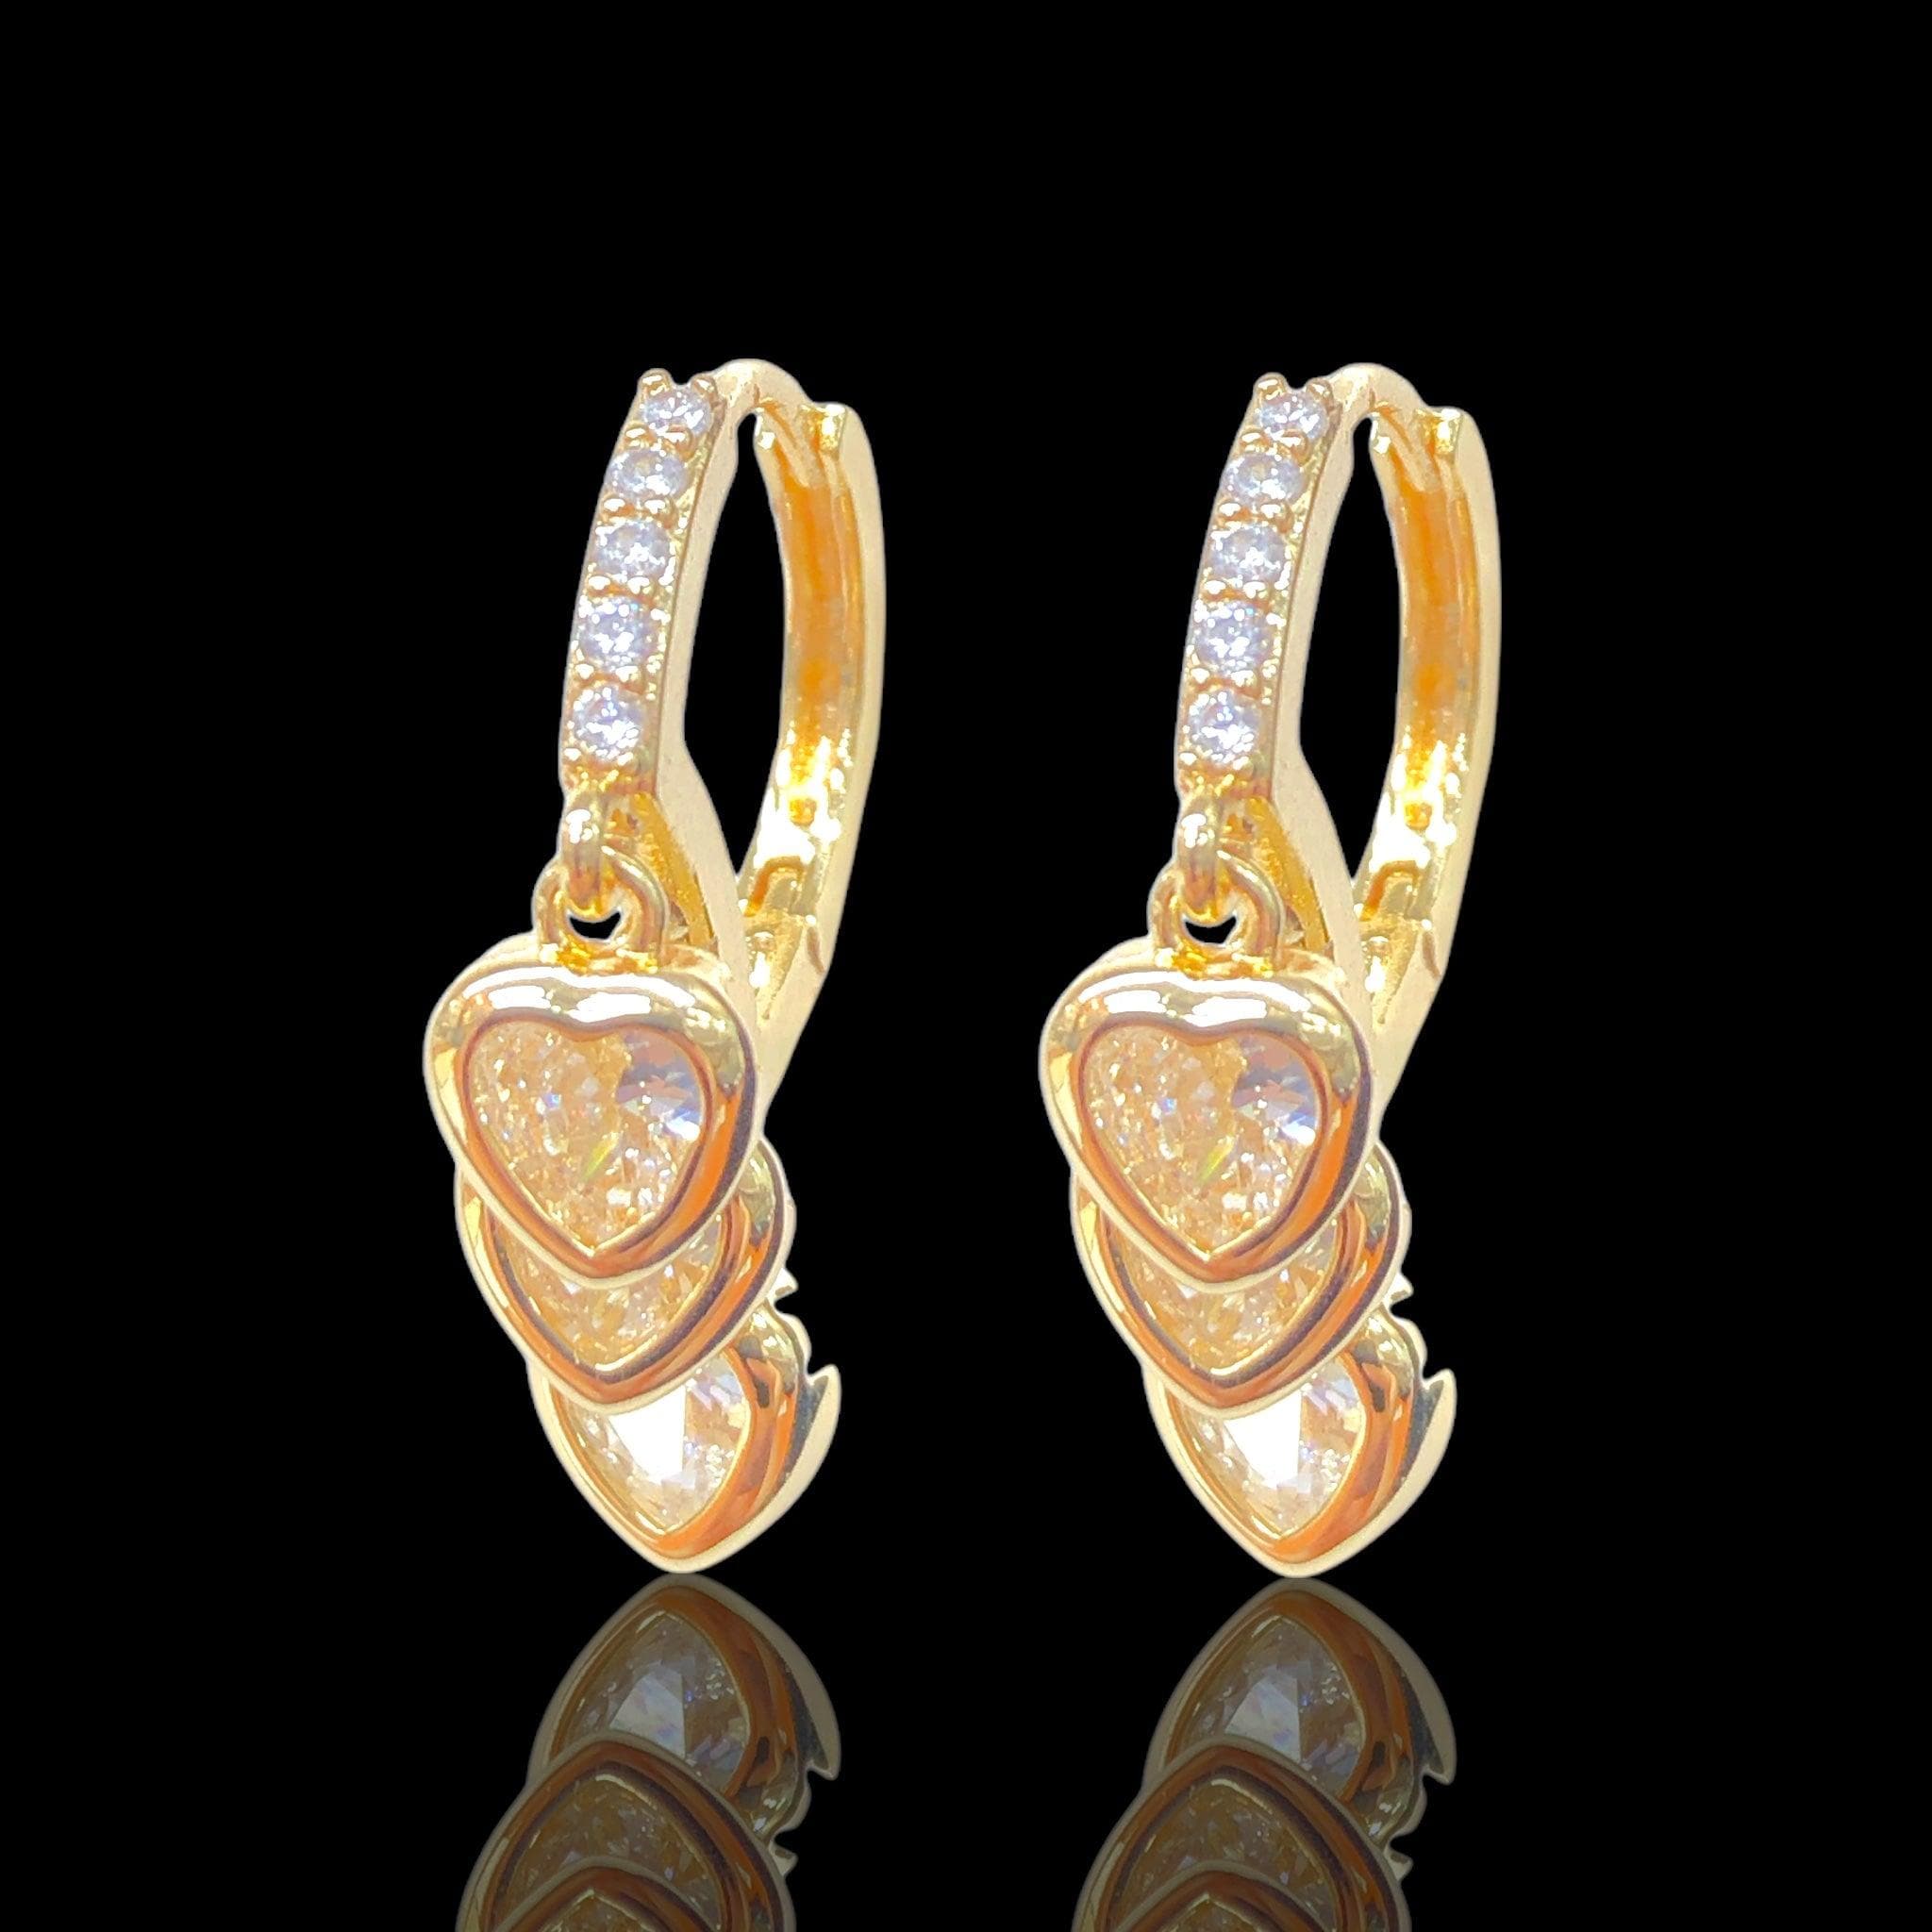 OLE 0637 18K Gold Filled Paris Triple Heart Dangle CZ Earrings- kuania oro laminado